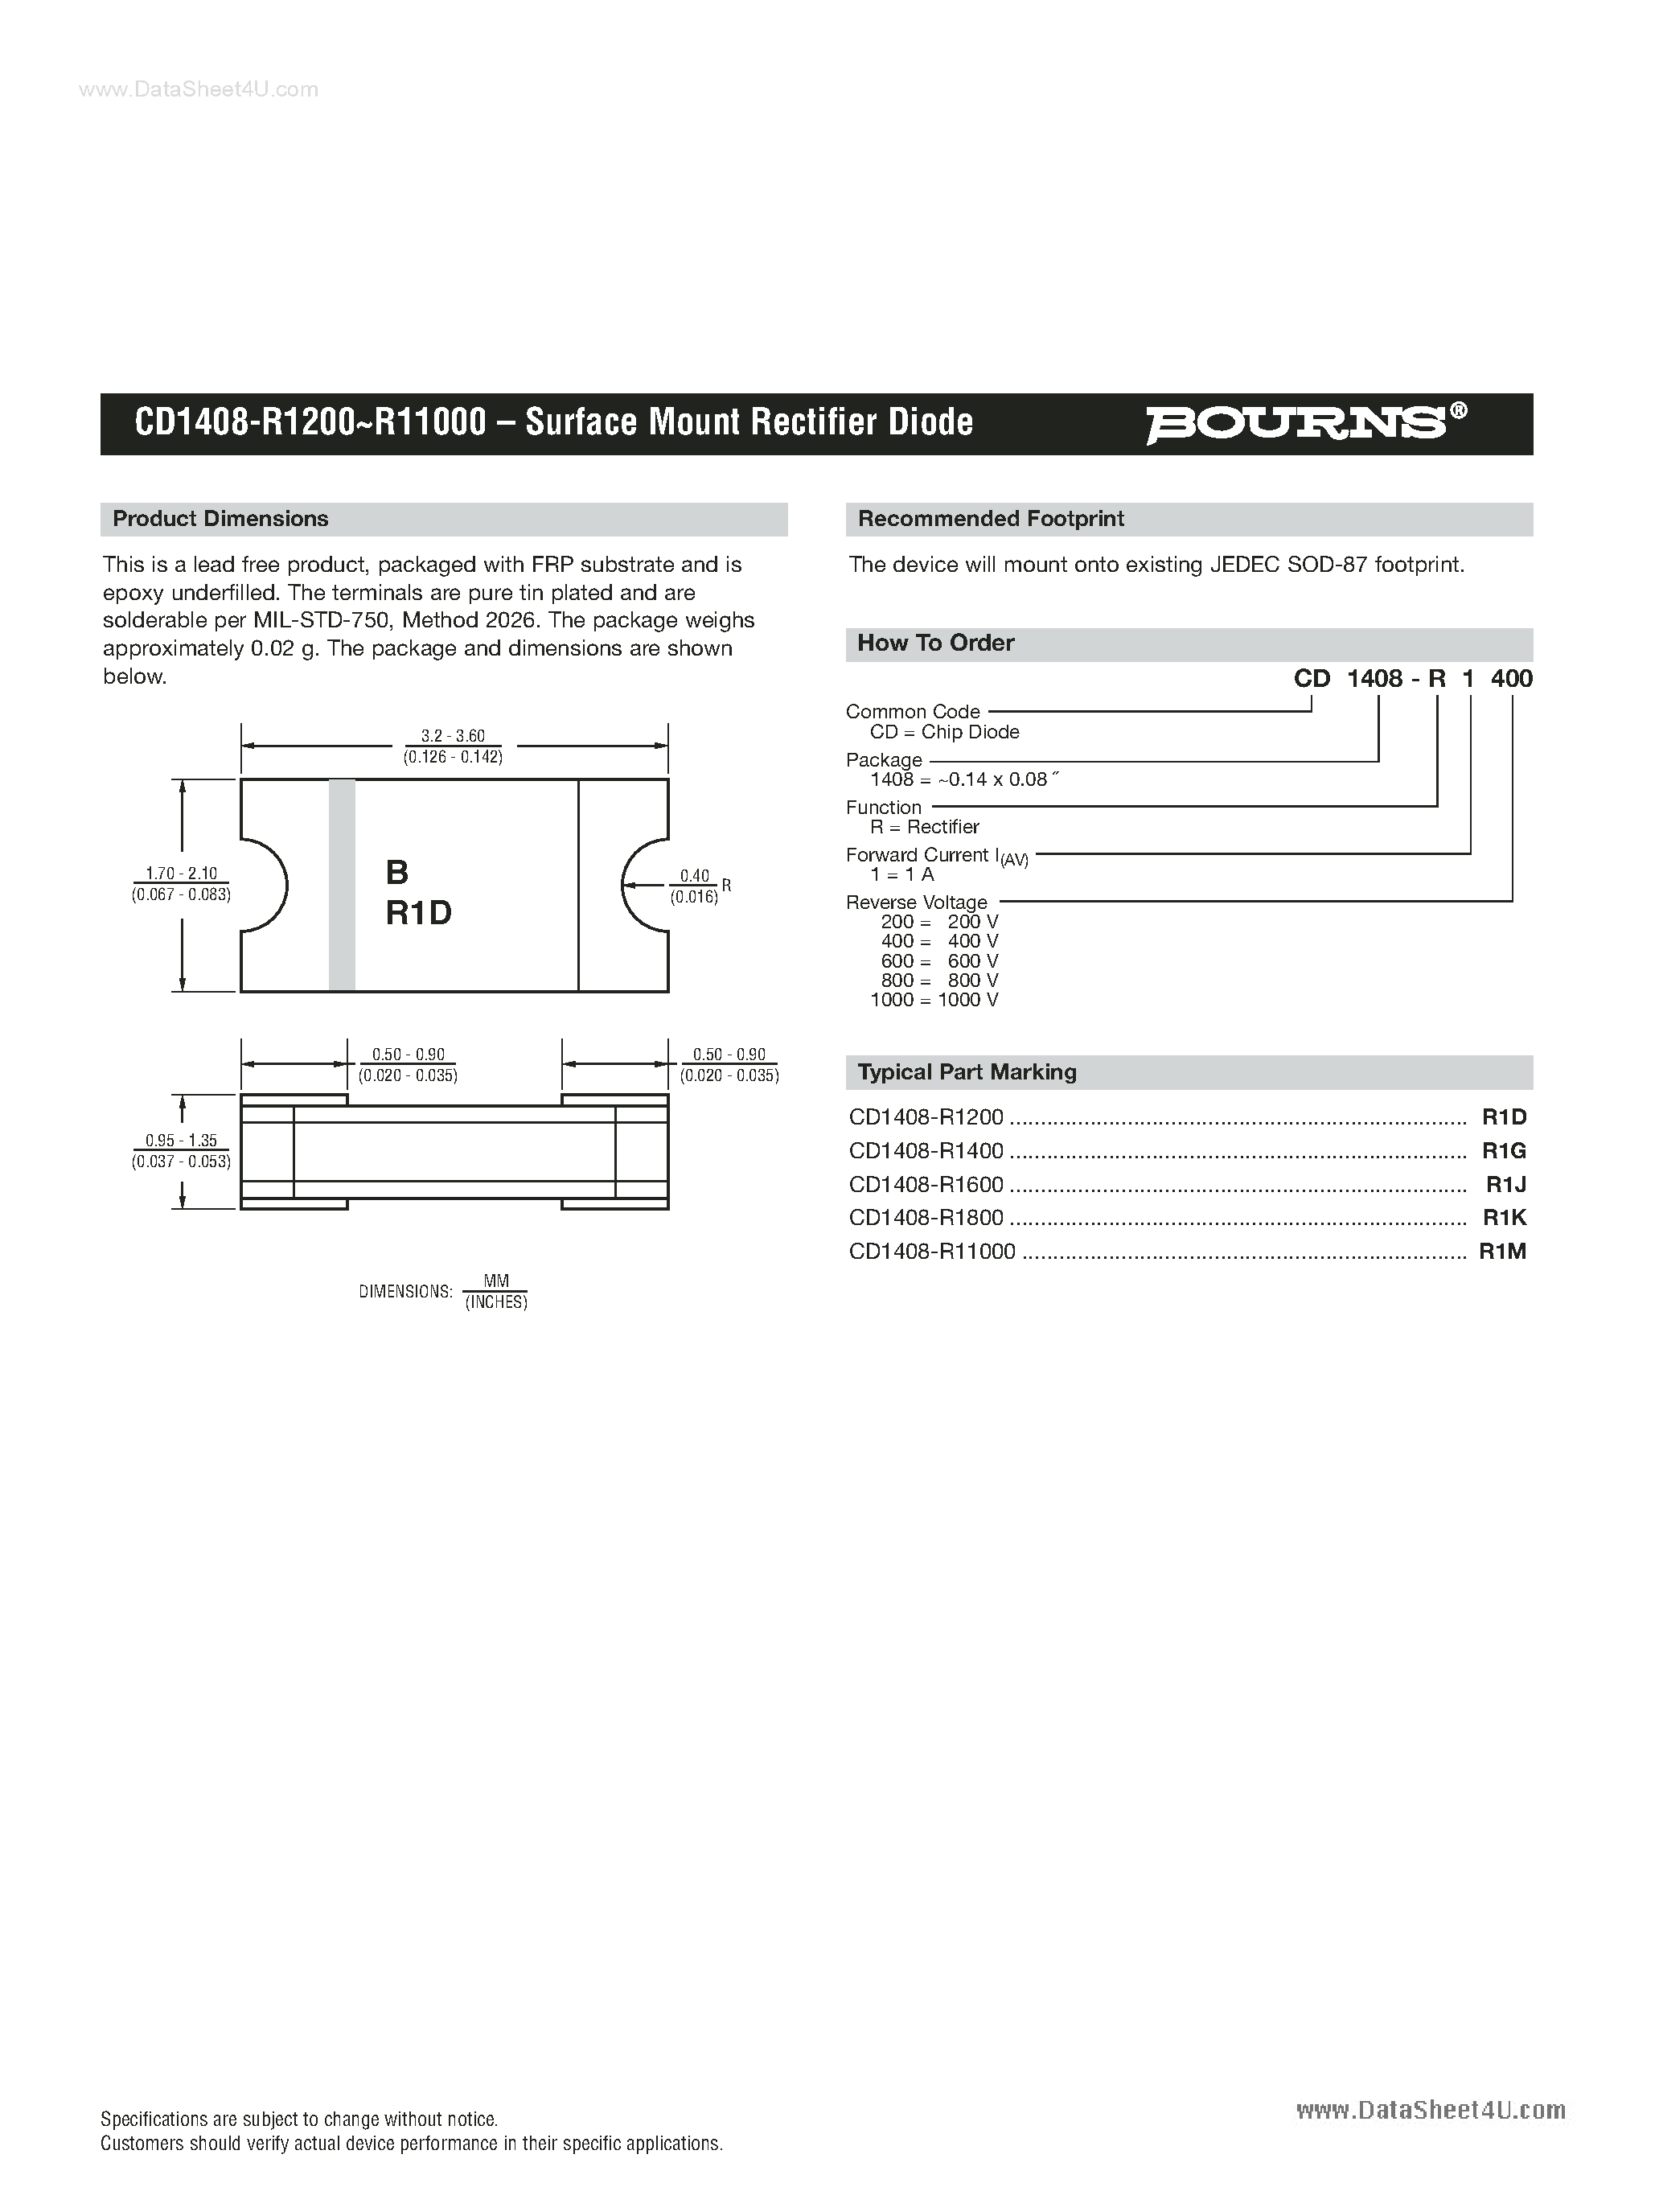 Datasheet CD1408-R1x00 - Surface Mount Rectifier Diode page 2